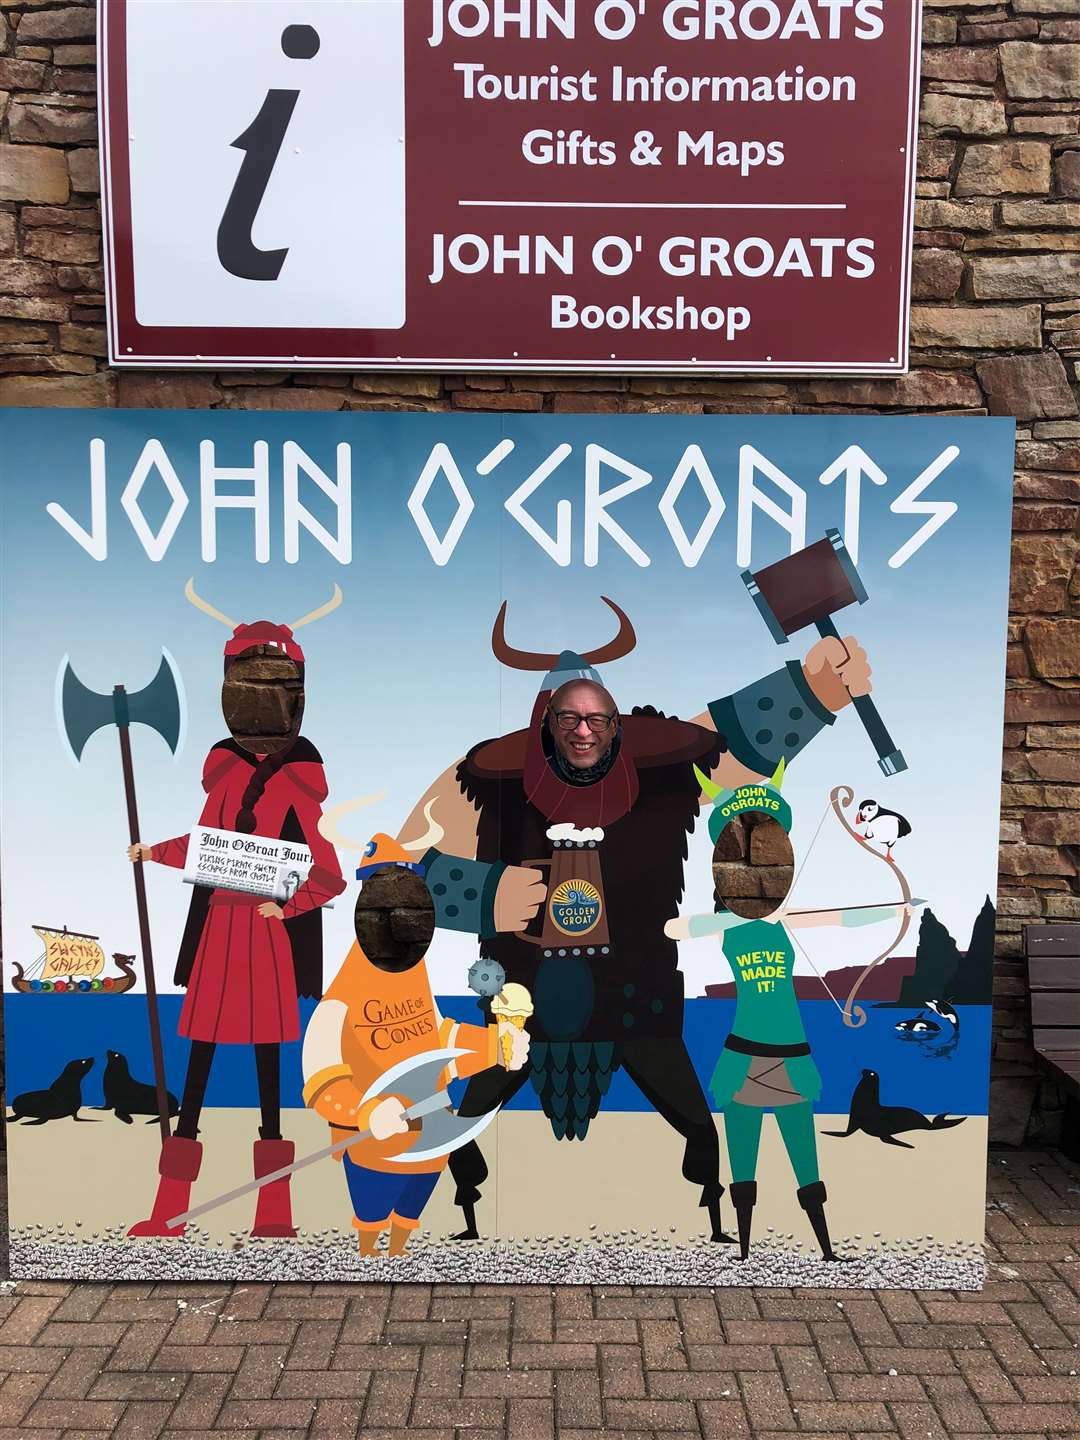 John O'Groats Brewery’s John Mainprize trying out the new Viking cutout photo board.